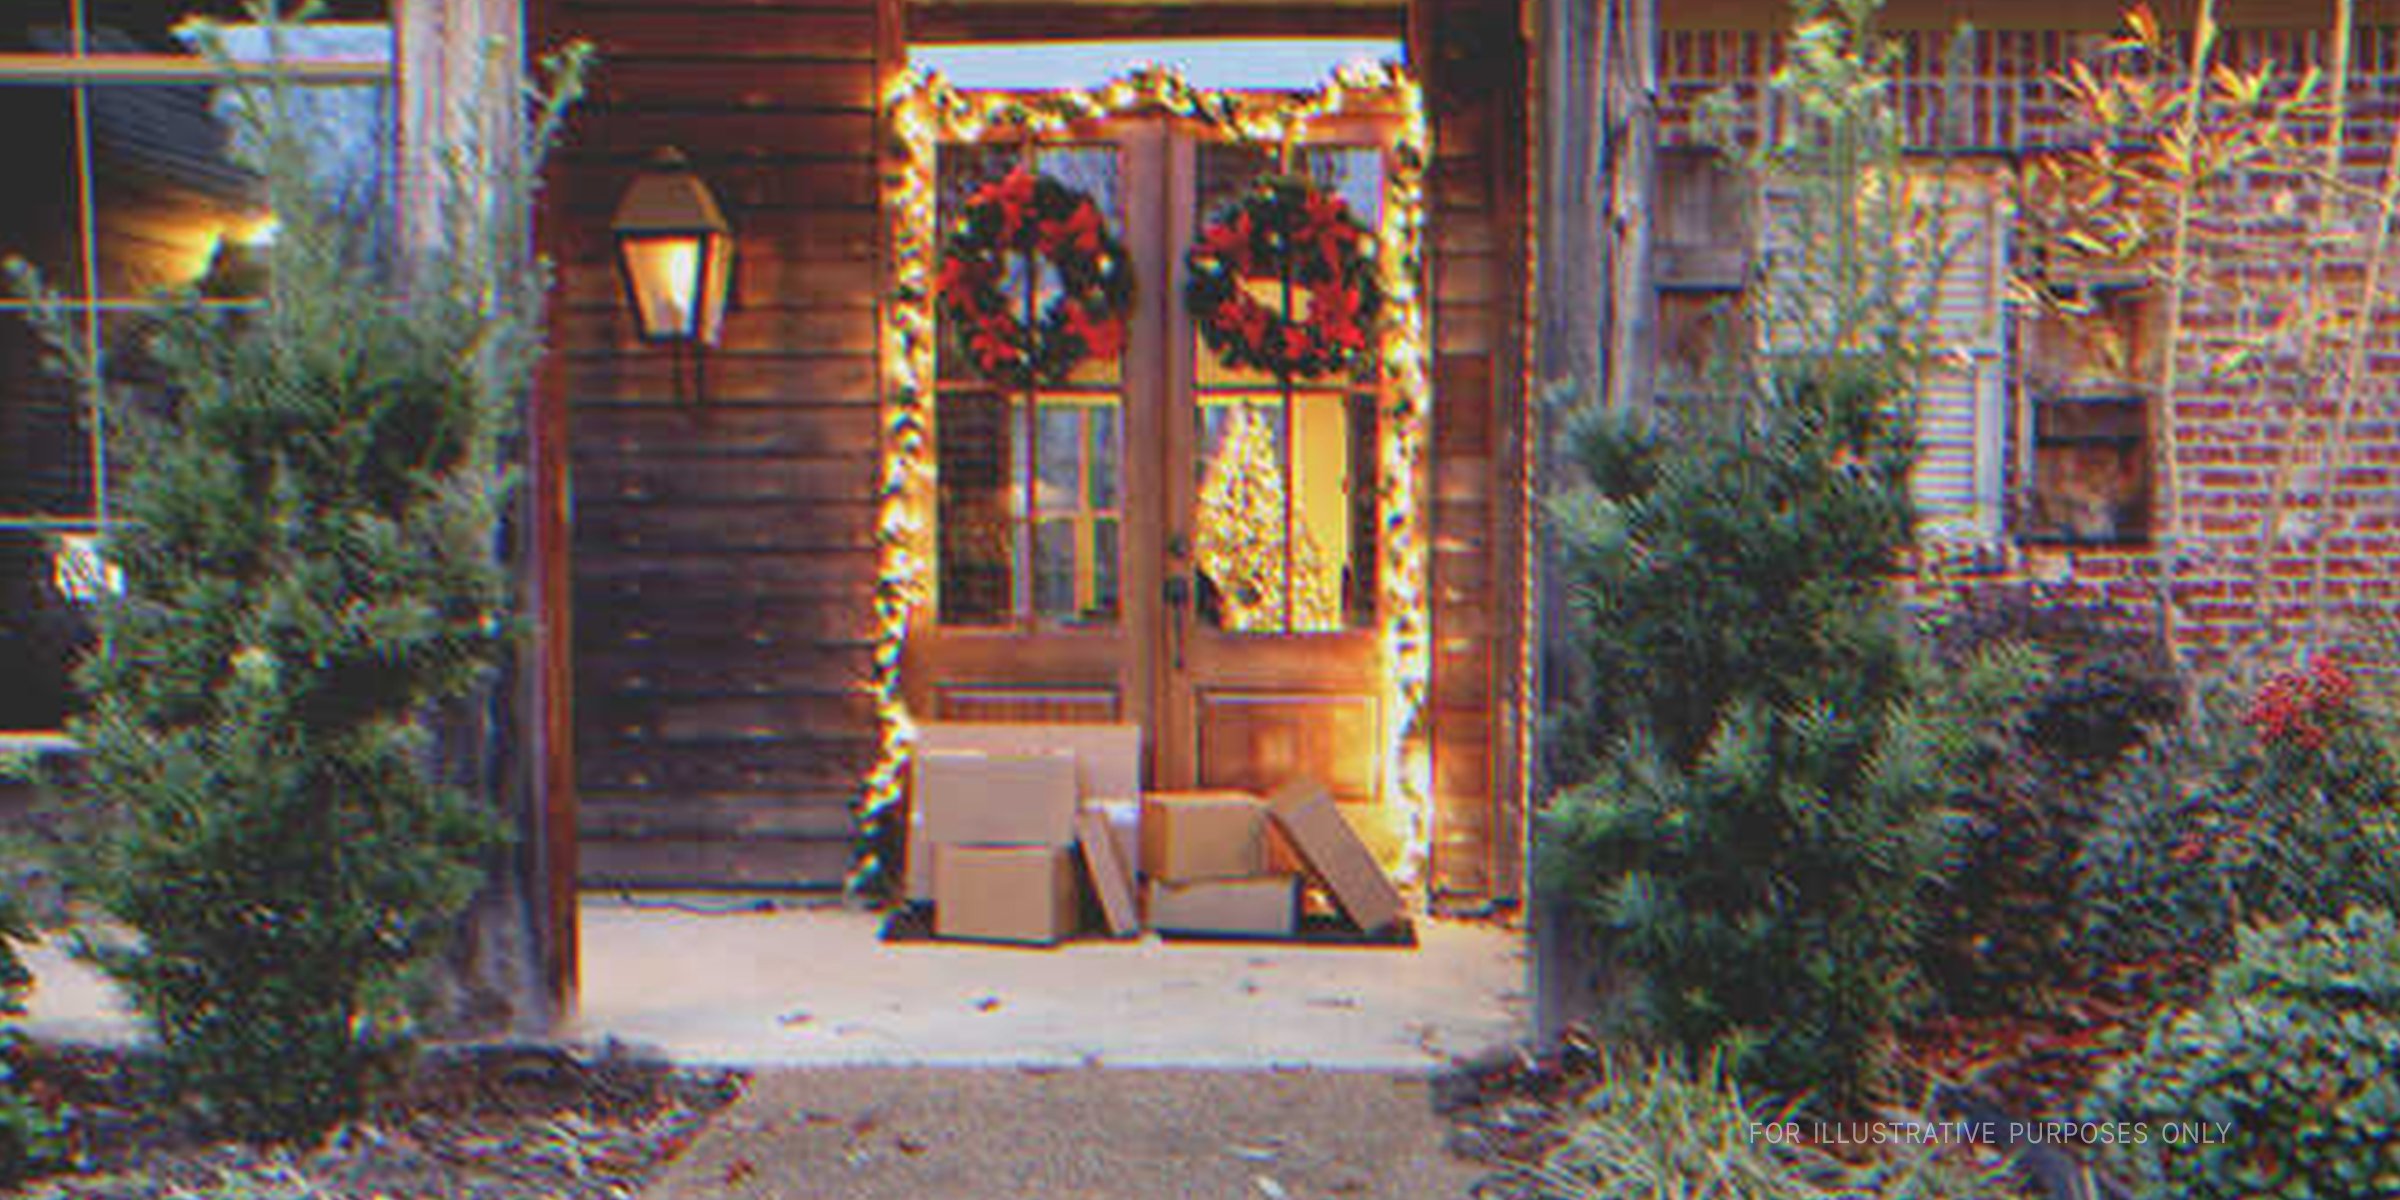 Piles of boxes at doorway | Source: Shutterstock